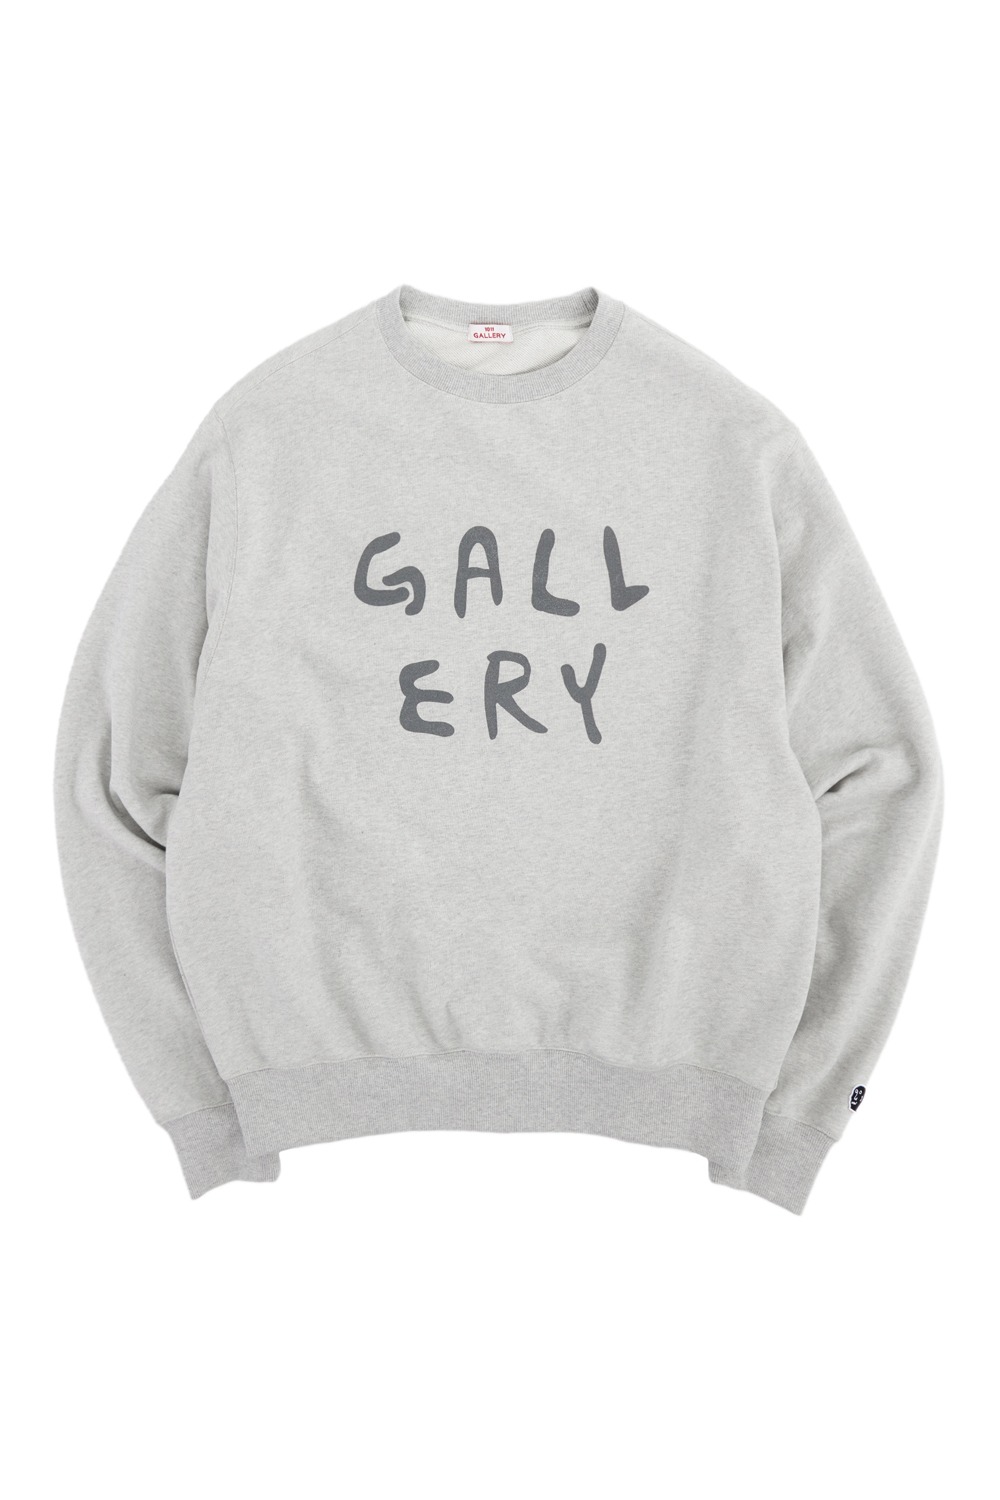 Gallery Logo Graphic Sweat Shirt - Light Grey